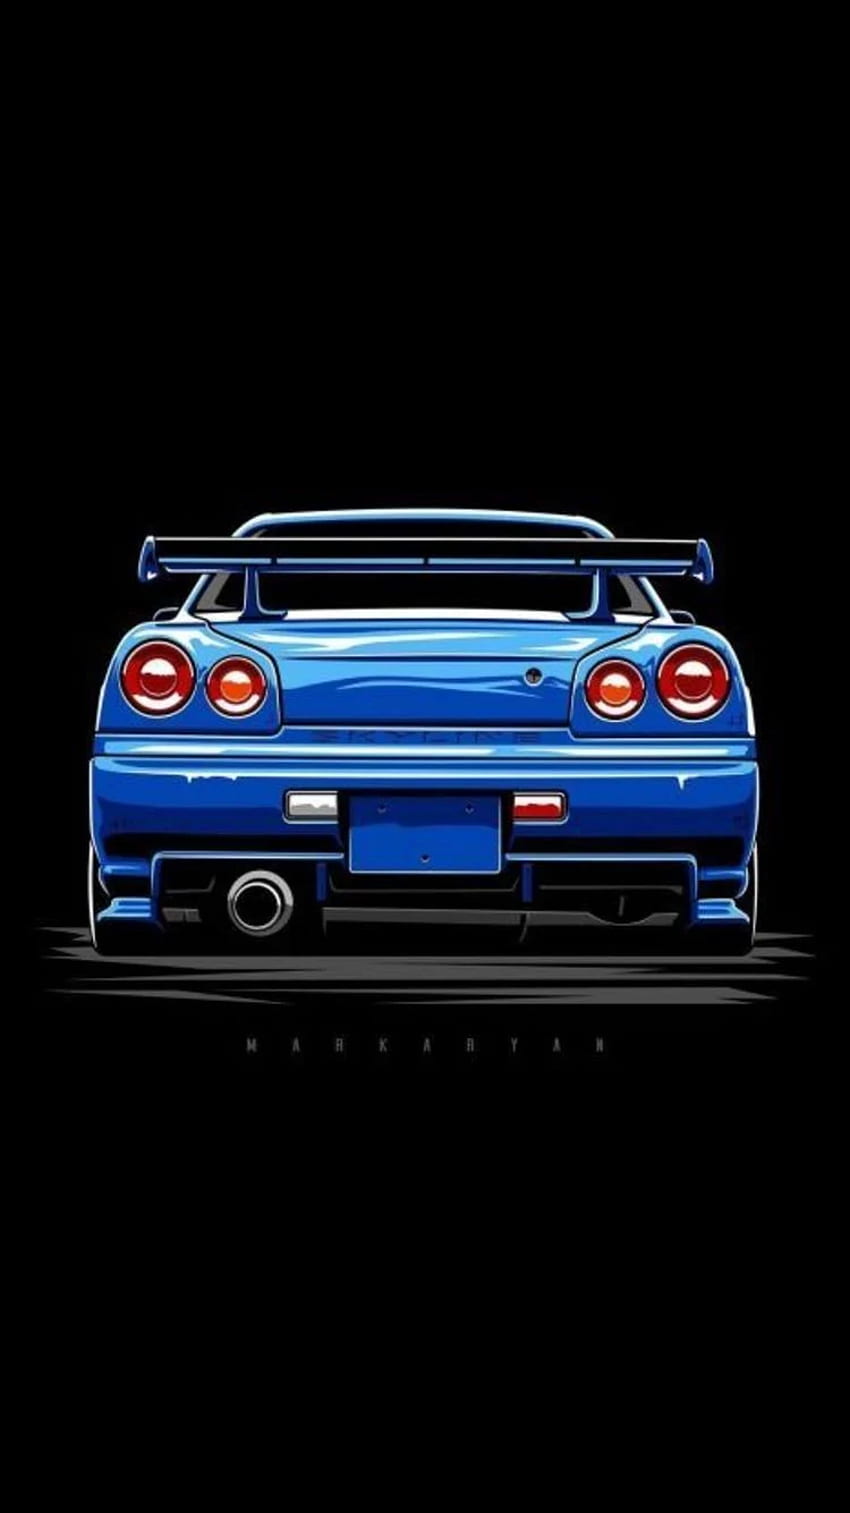 Download Skyline R34 GTR wallpaper by AbdxllahM - a3 - Free on ZEDGE™ now.  Browse millions of popular nissan … | Nissan skyline, Sports cars luxury,  Skyline gtr r34